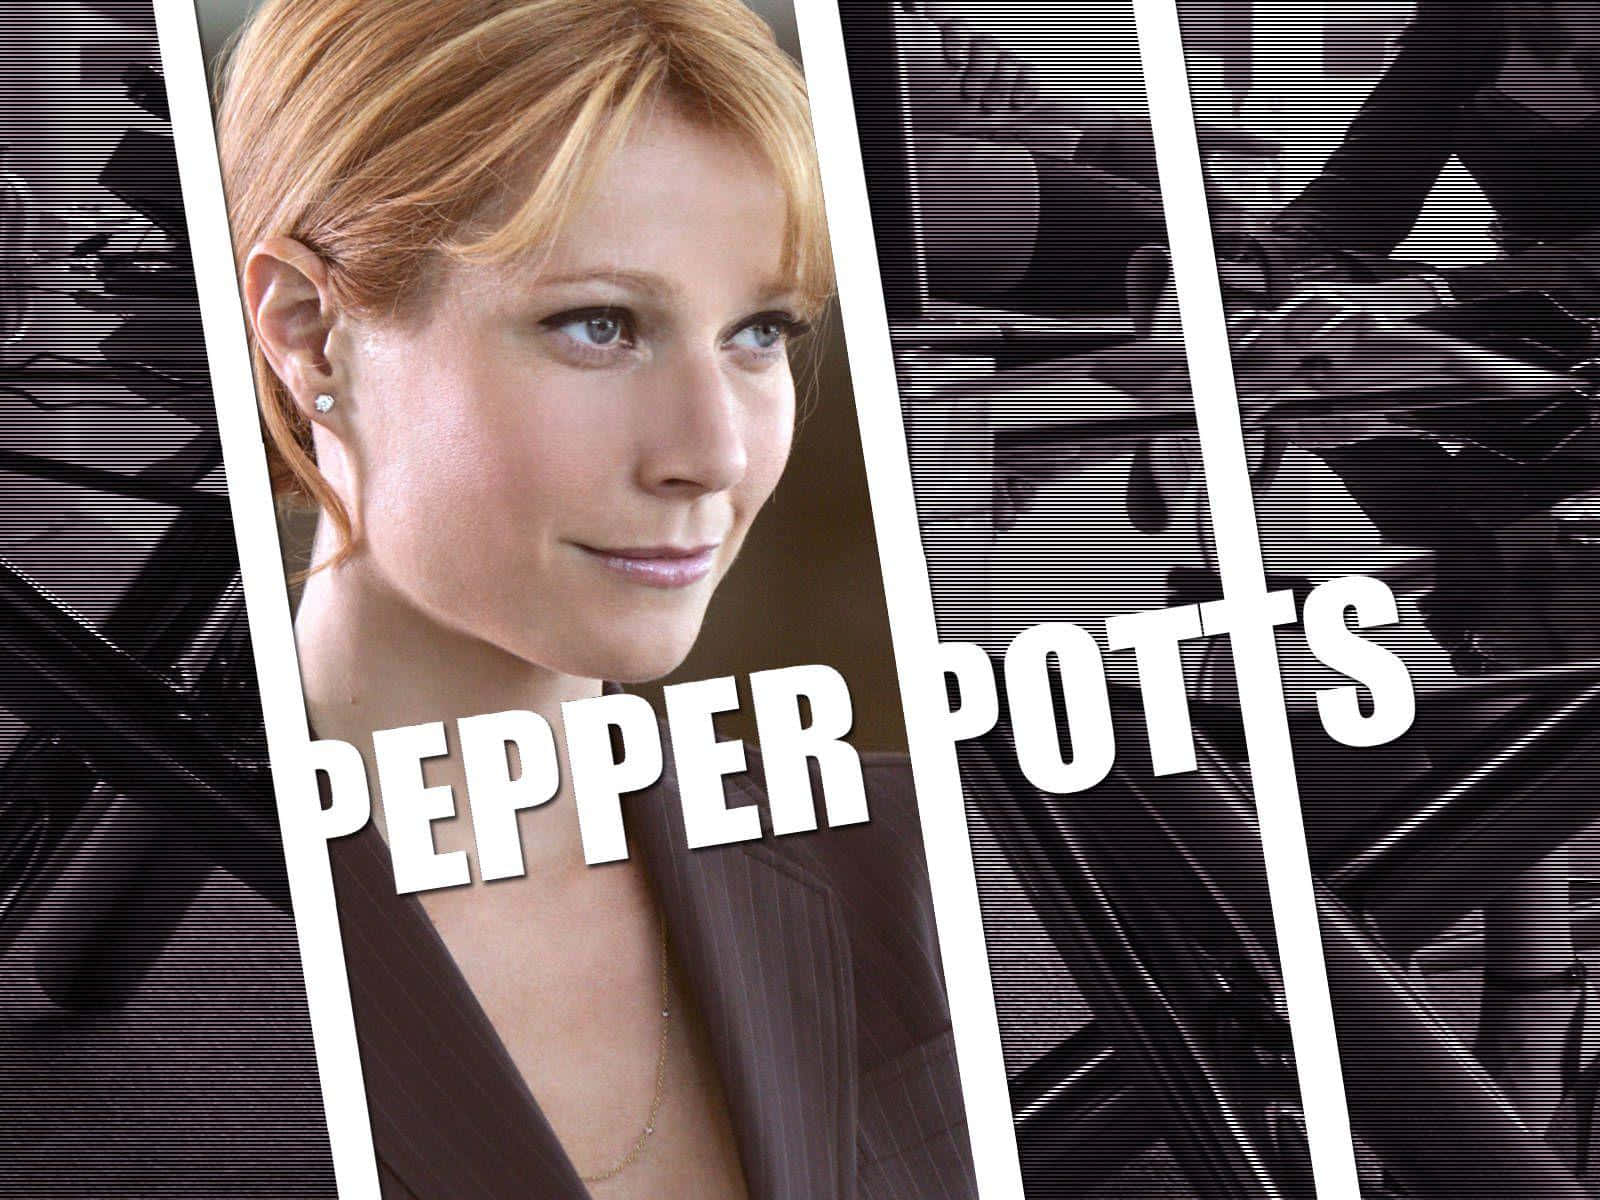 Pepper Potts in Iron Man Suit Wallpaper